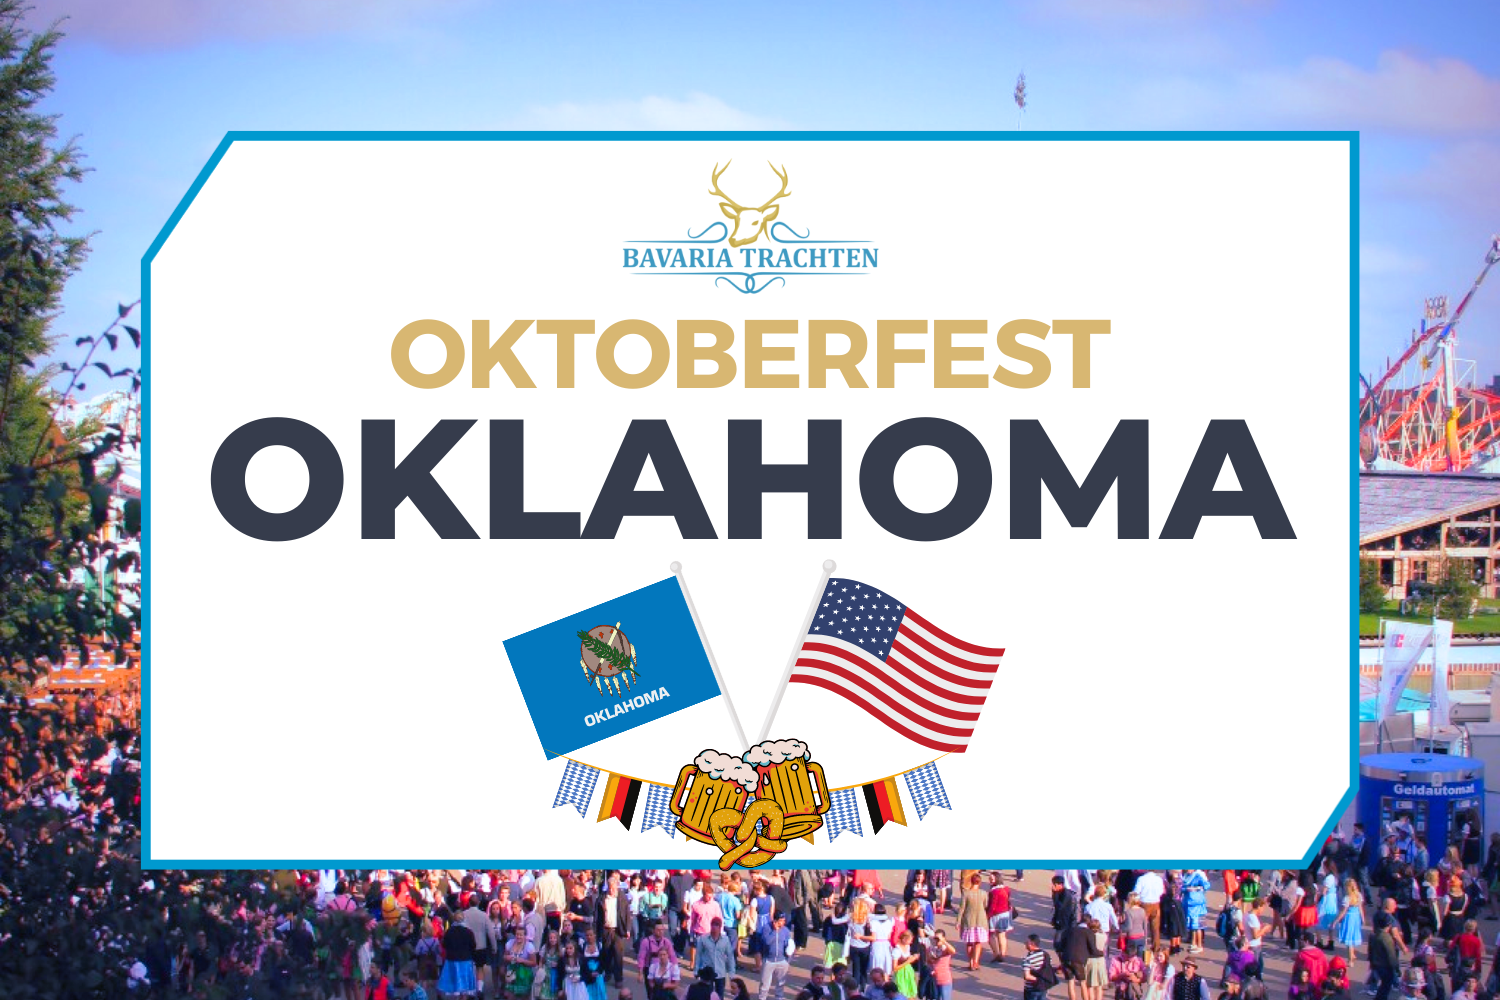 Experience Oktoberfest in Oklahoma like never before Bavaria Trachten